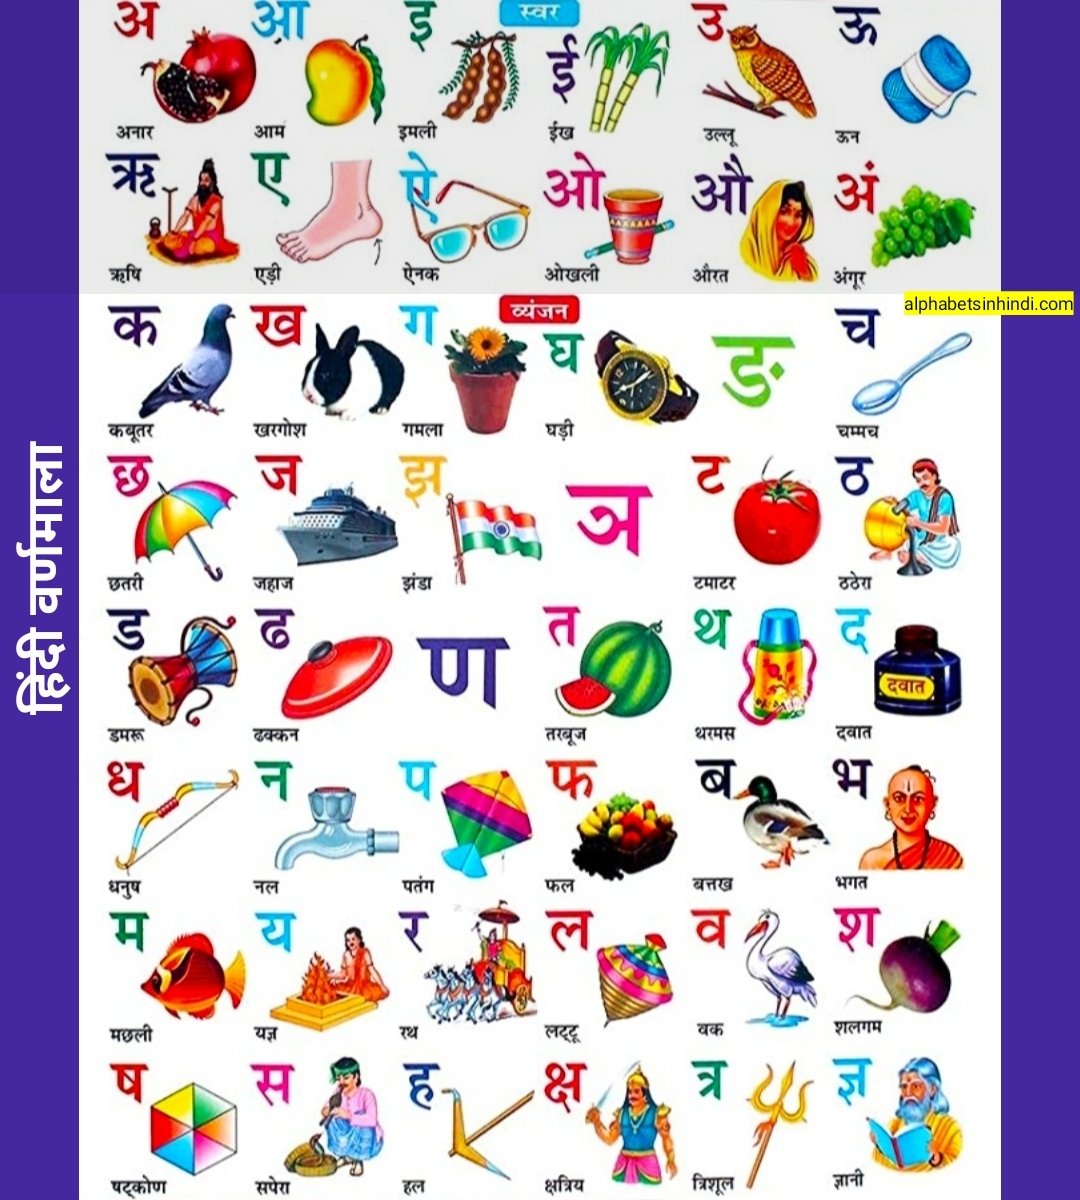 hindi-varnamala-letters-with-words-in-2021-hindi-alphabet-alphabet-images